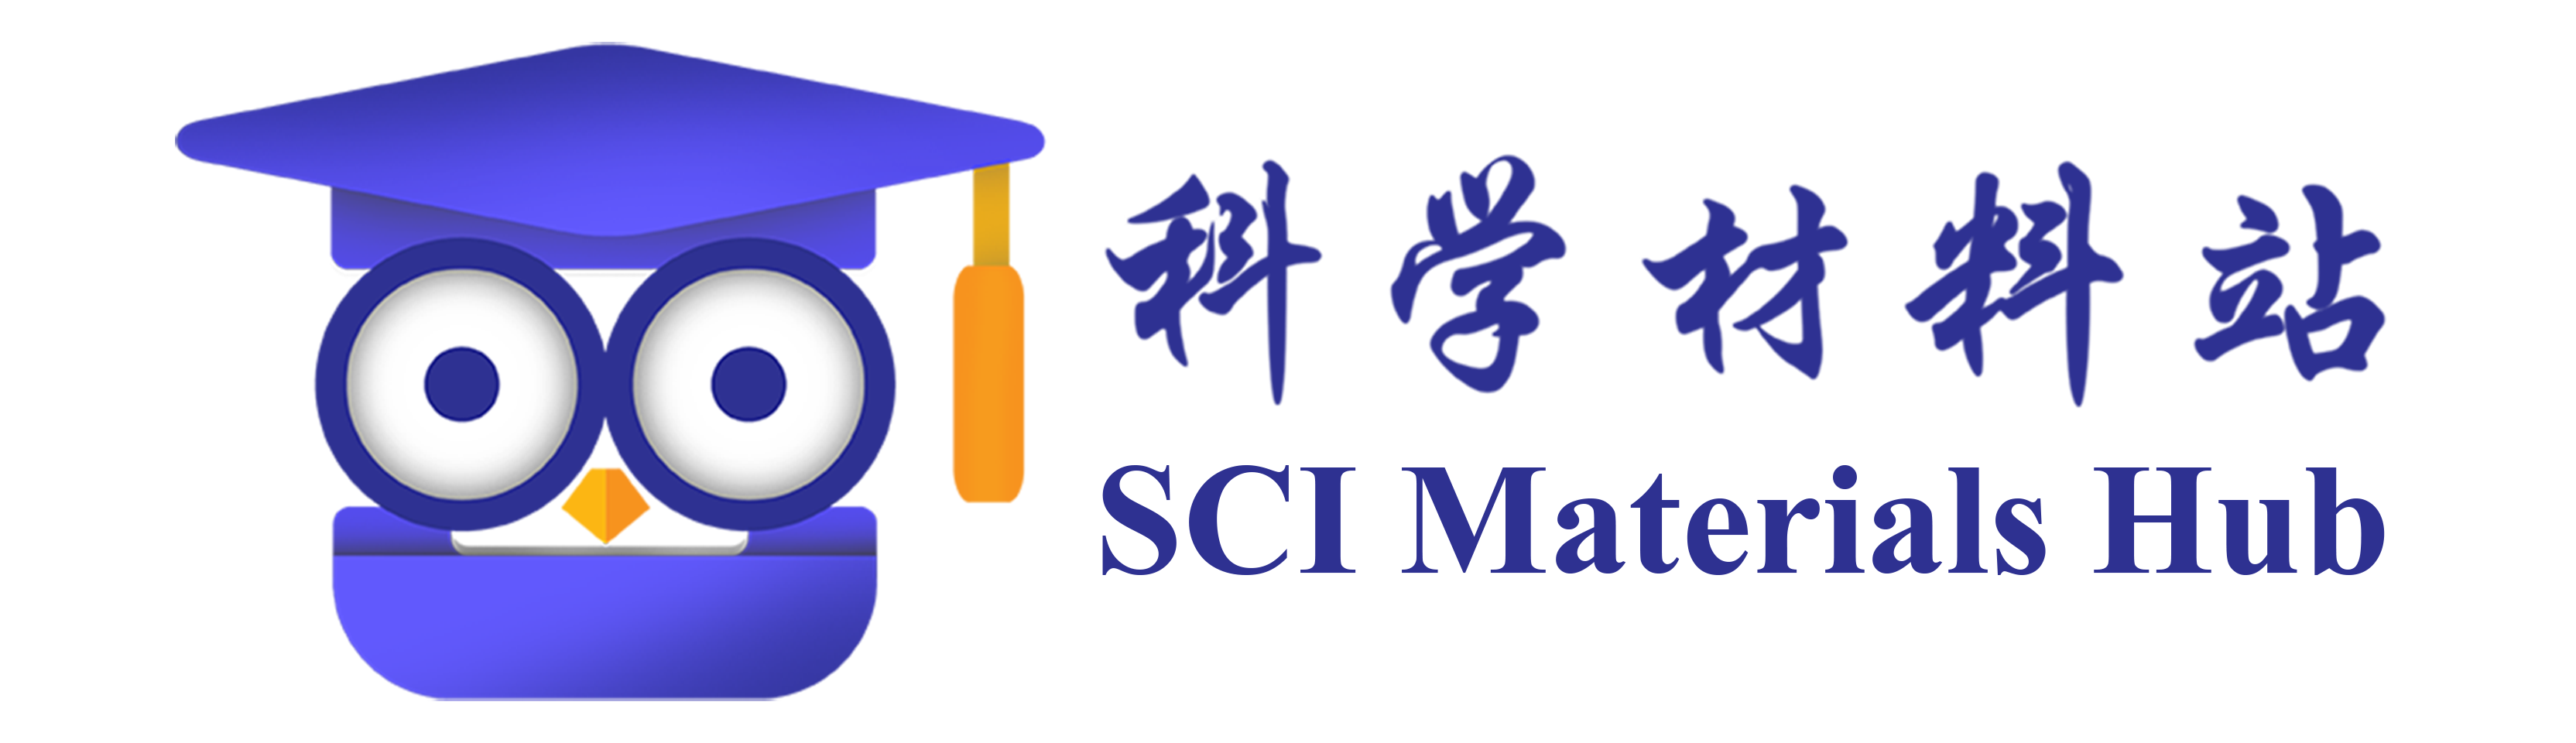 科学材料站 SCI Materials Hub